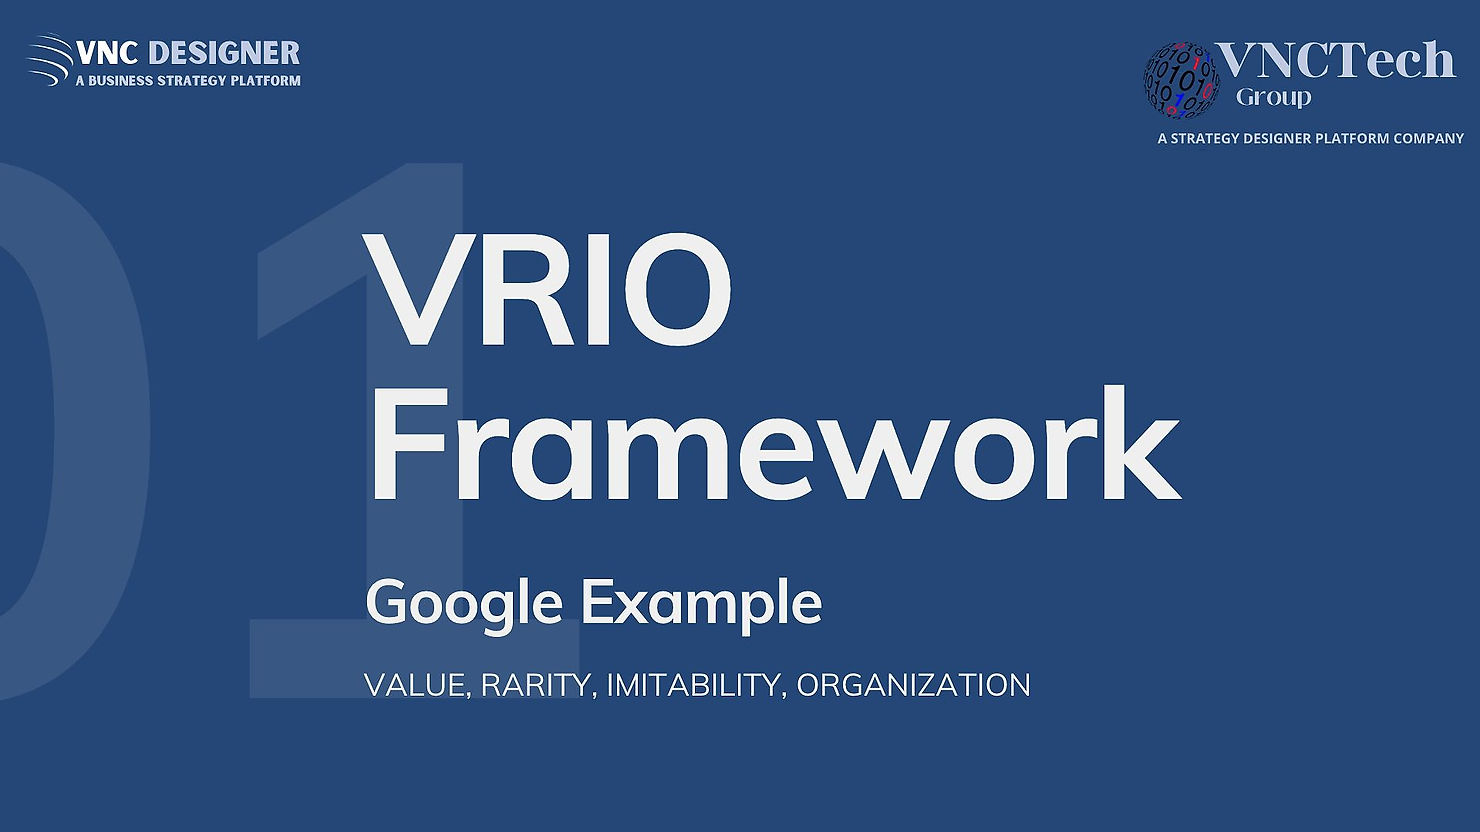 VRIO Analysis - Google Example